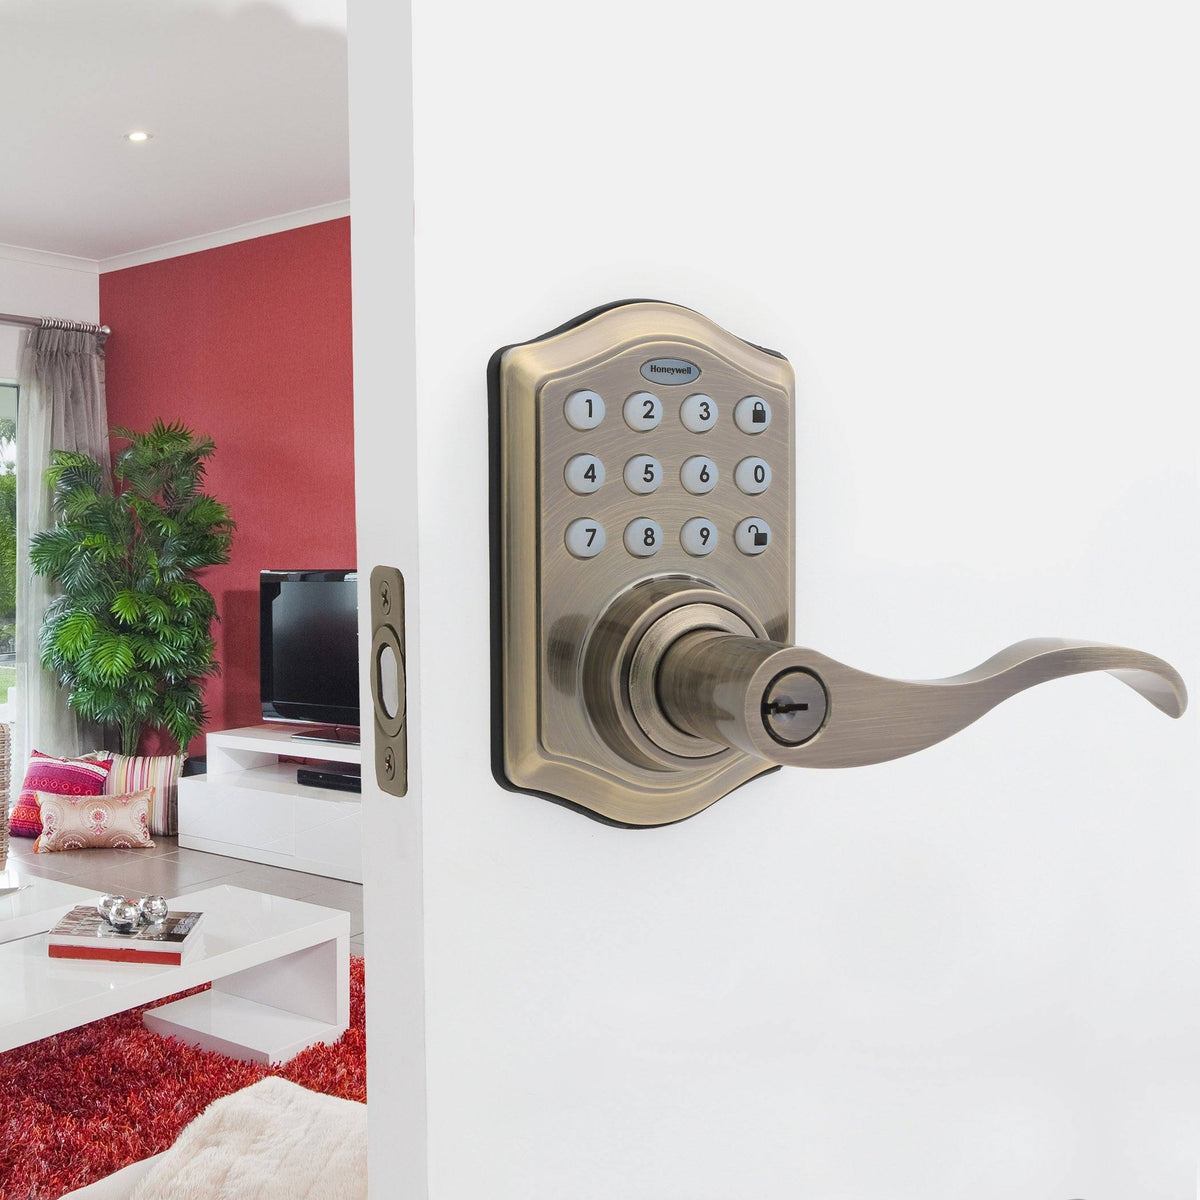 Honeywell 8734101 Electronic Entry Lever Door Lock with Keypad in Antique Brass Installed on Door